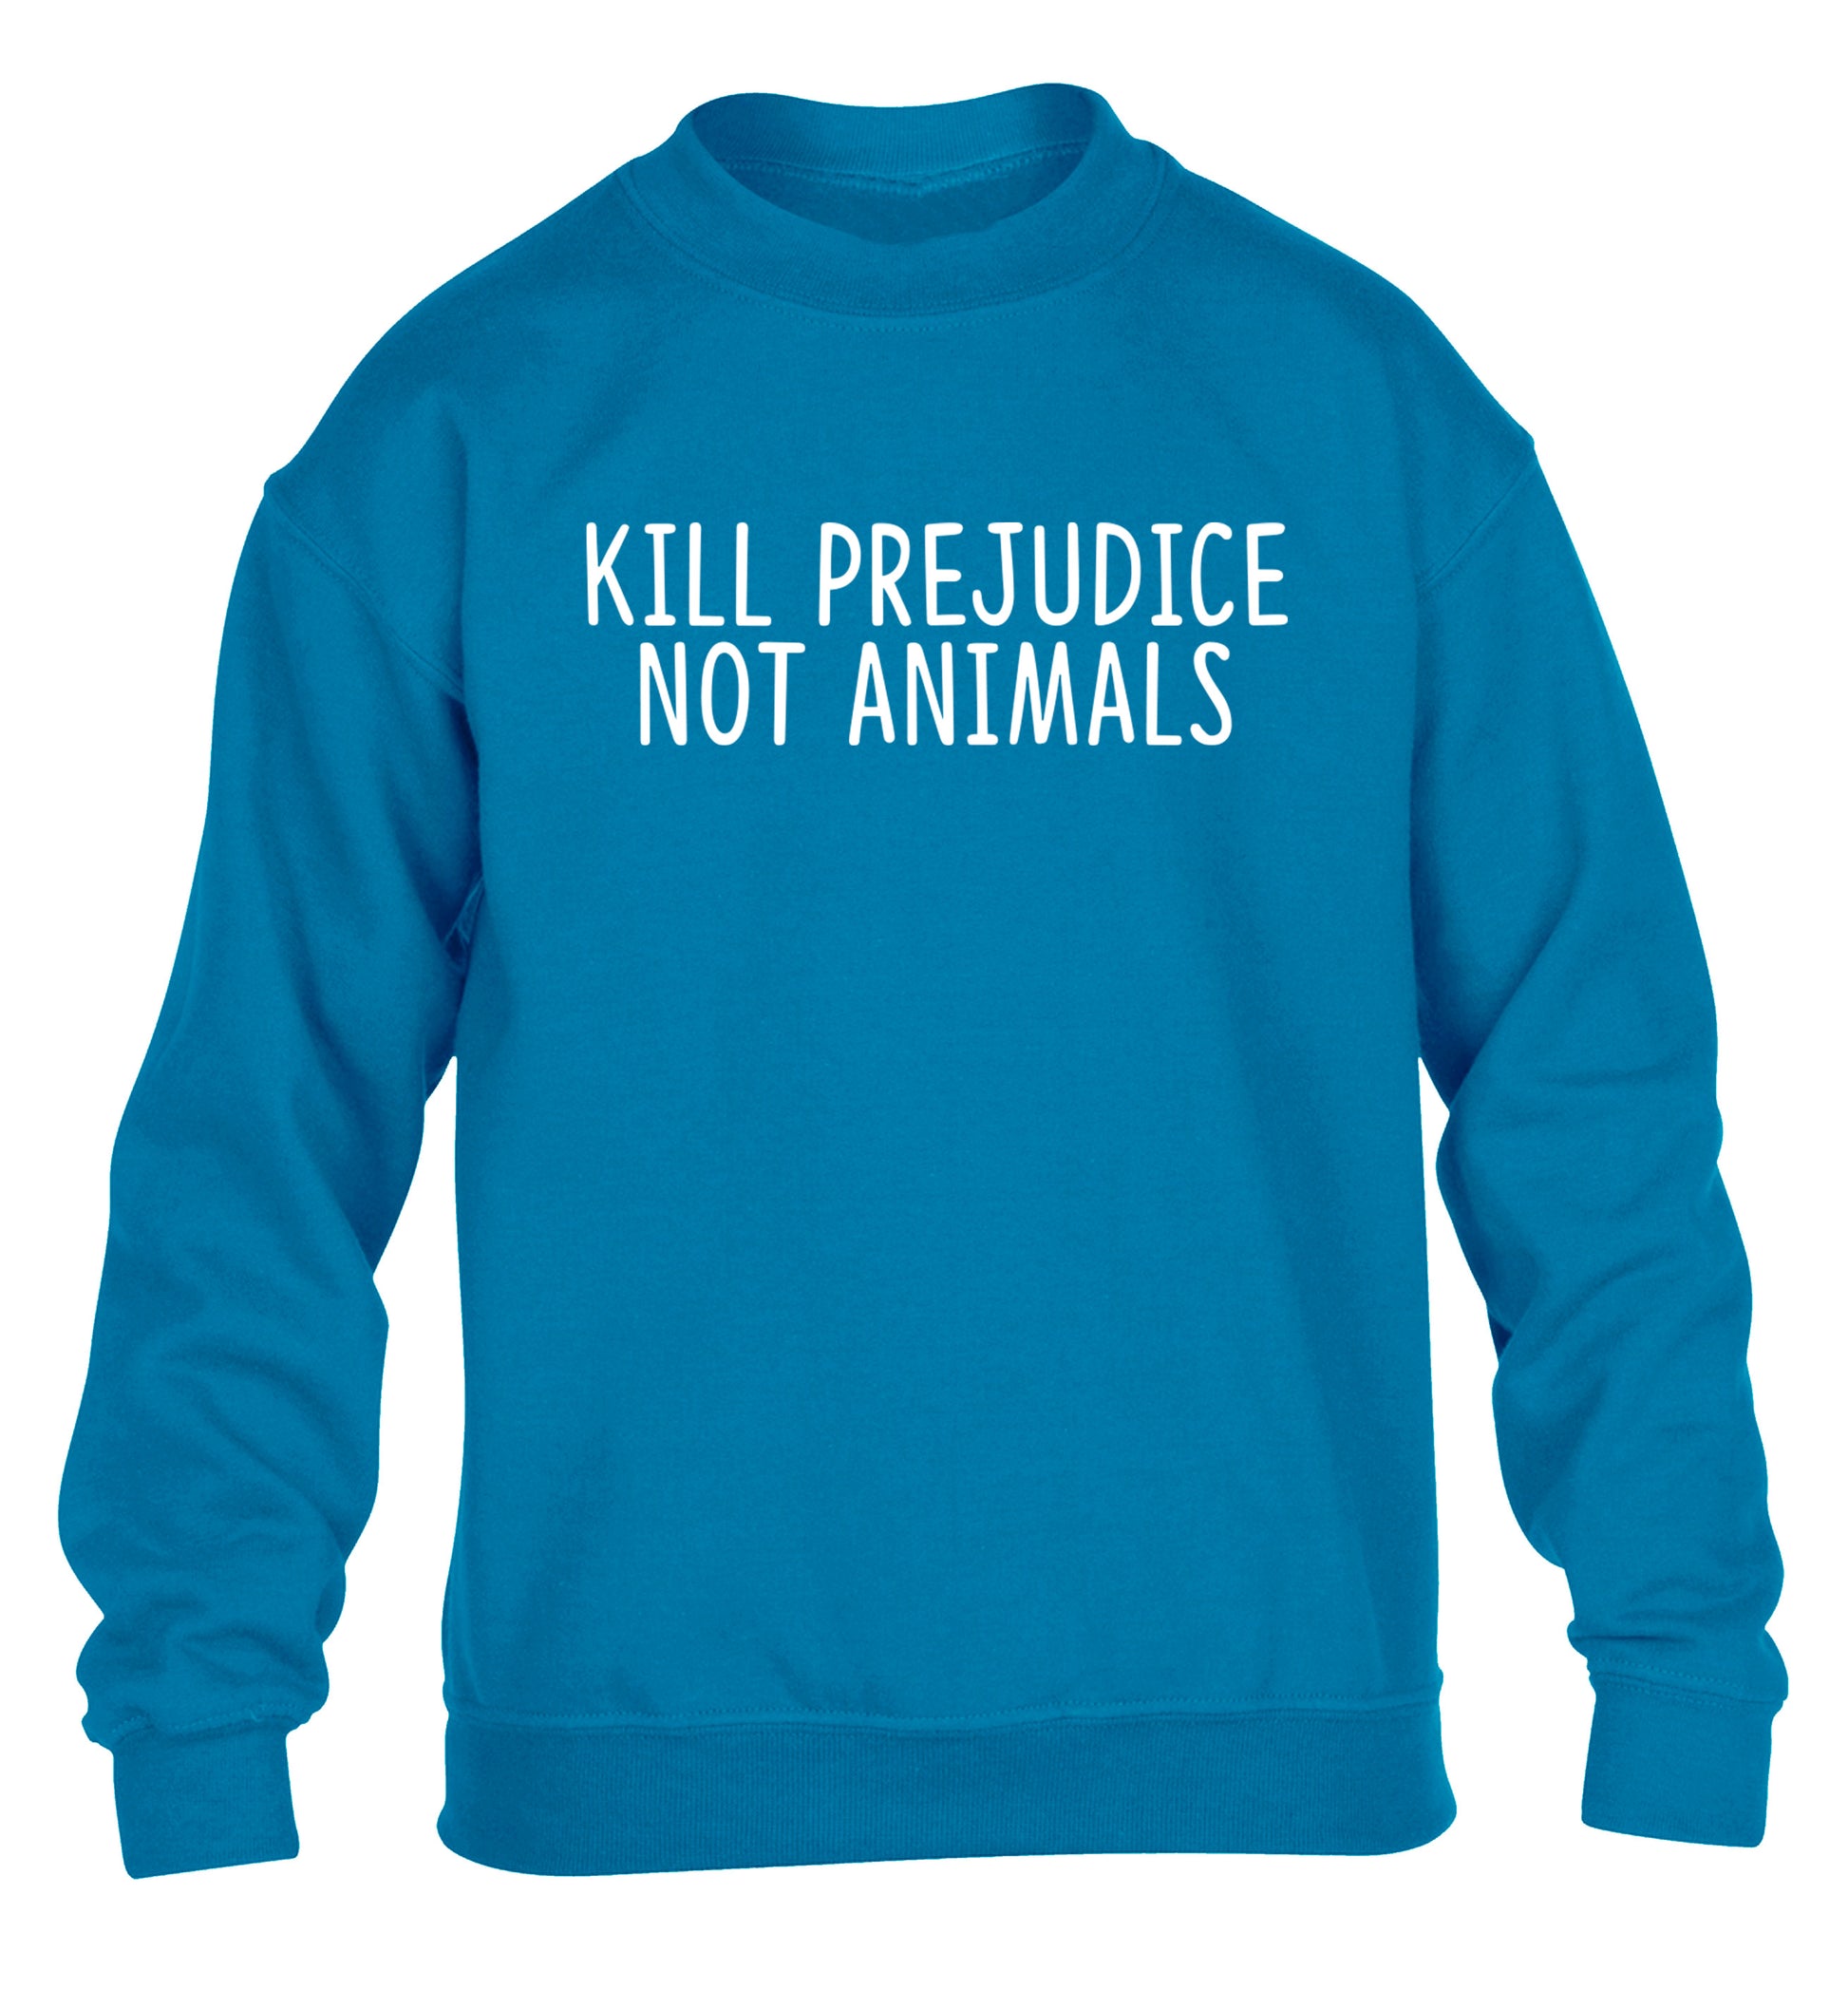 Kill Prejudice Not Animals children's blue sweater 12-13 Years